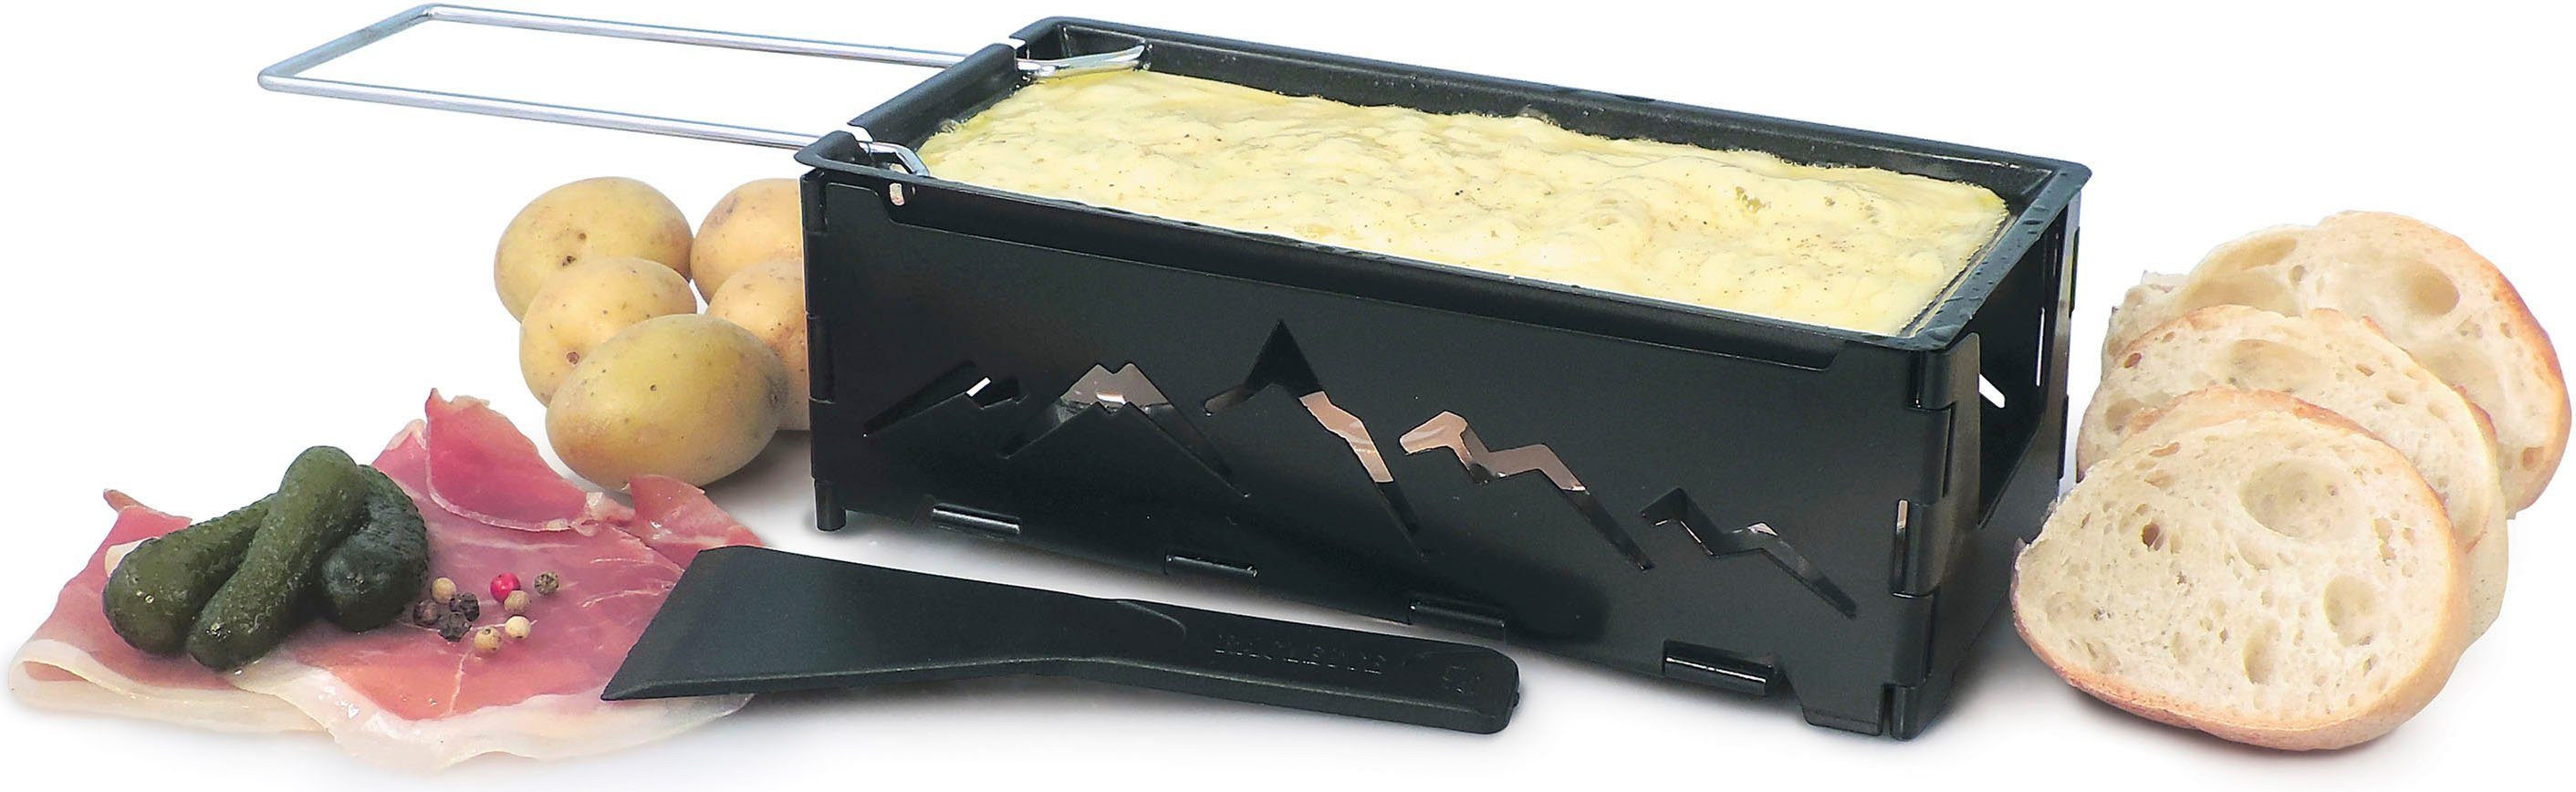 Raclette Nordic Edelstahl, SWISSMAR Candlelight, faltbar